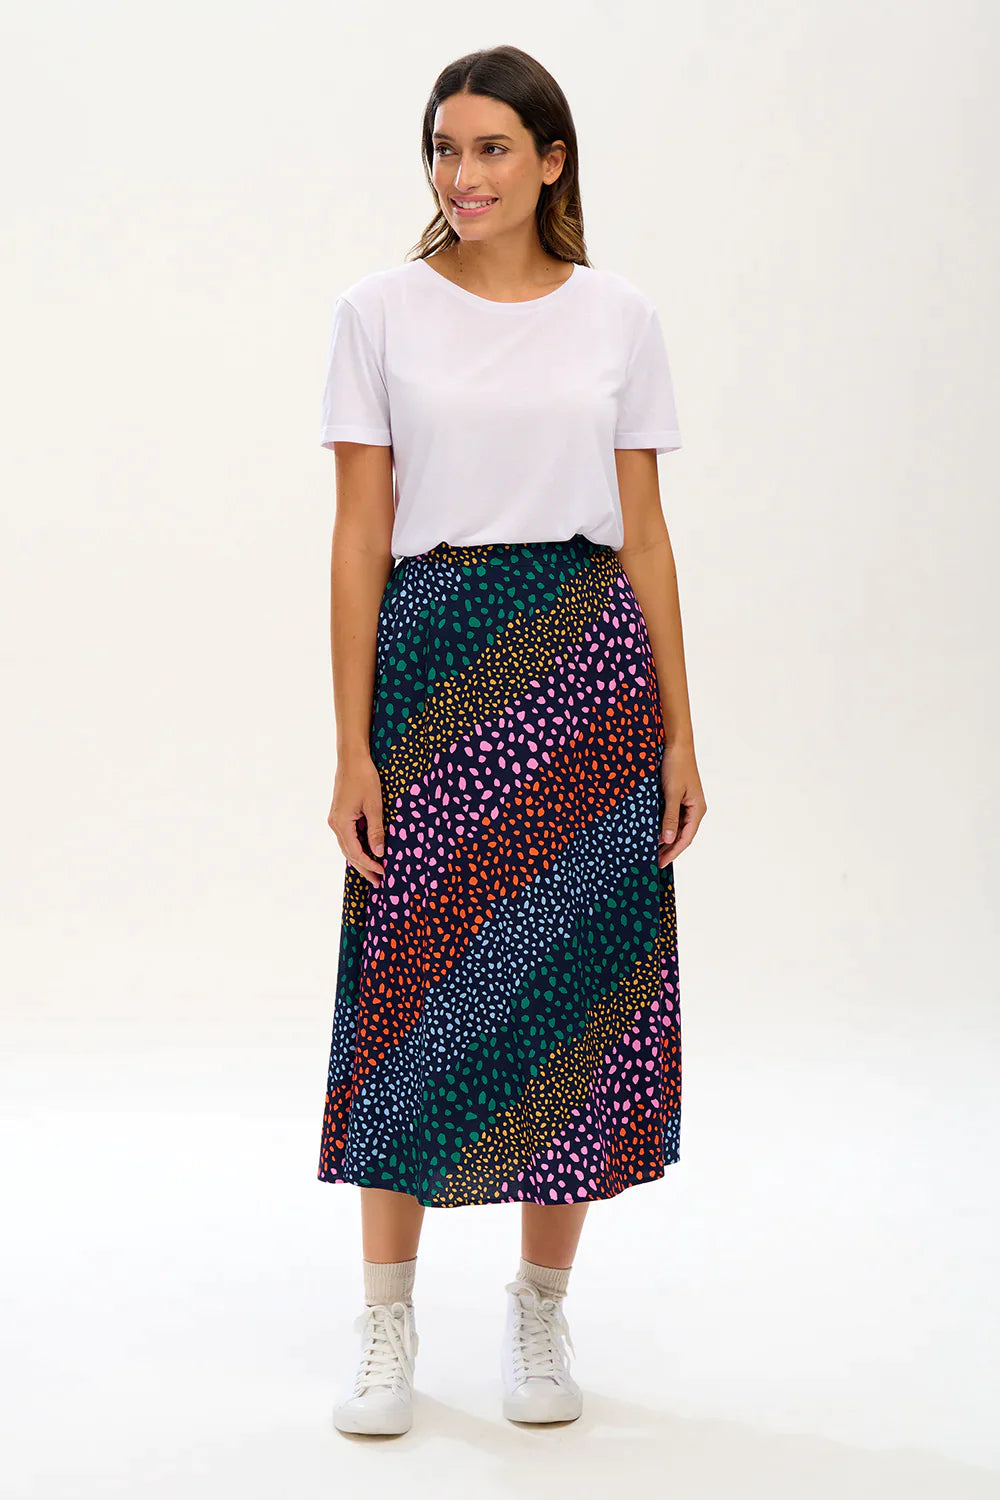 Zora Skirt - Navy/Multi, Painterly Spot Stripe